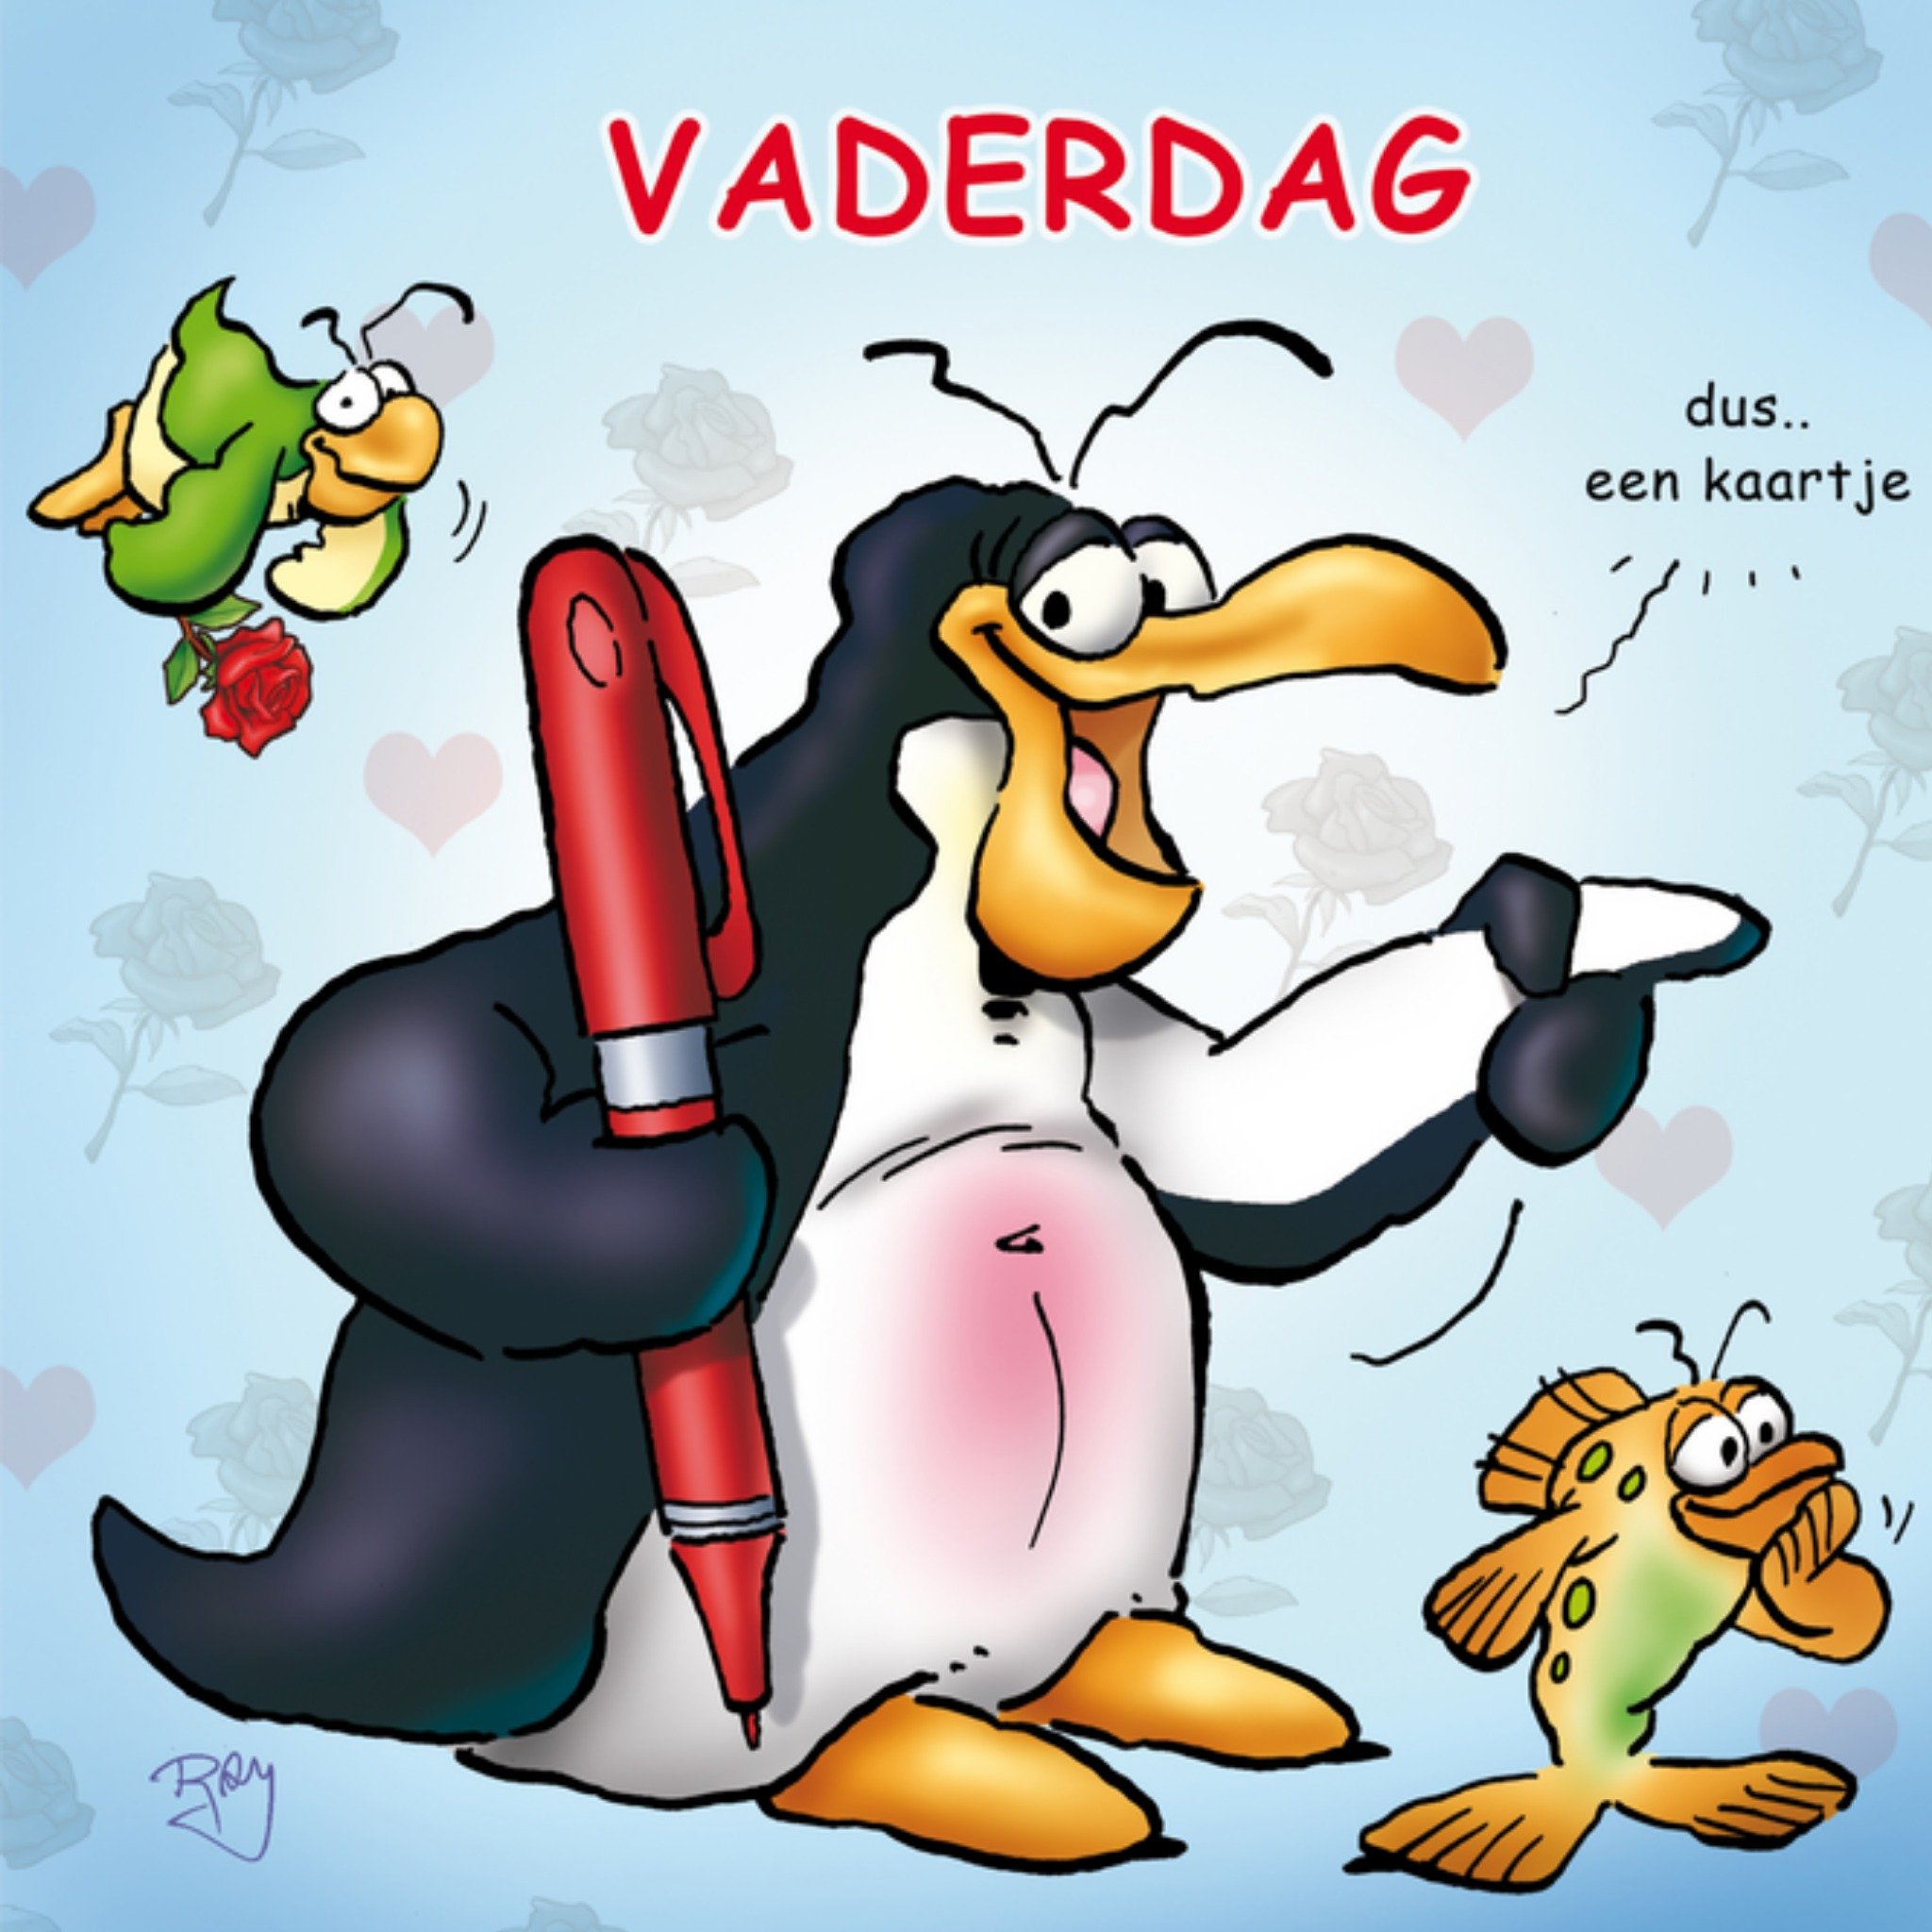 Doodles - Vaderdagkaart - pinguin